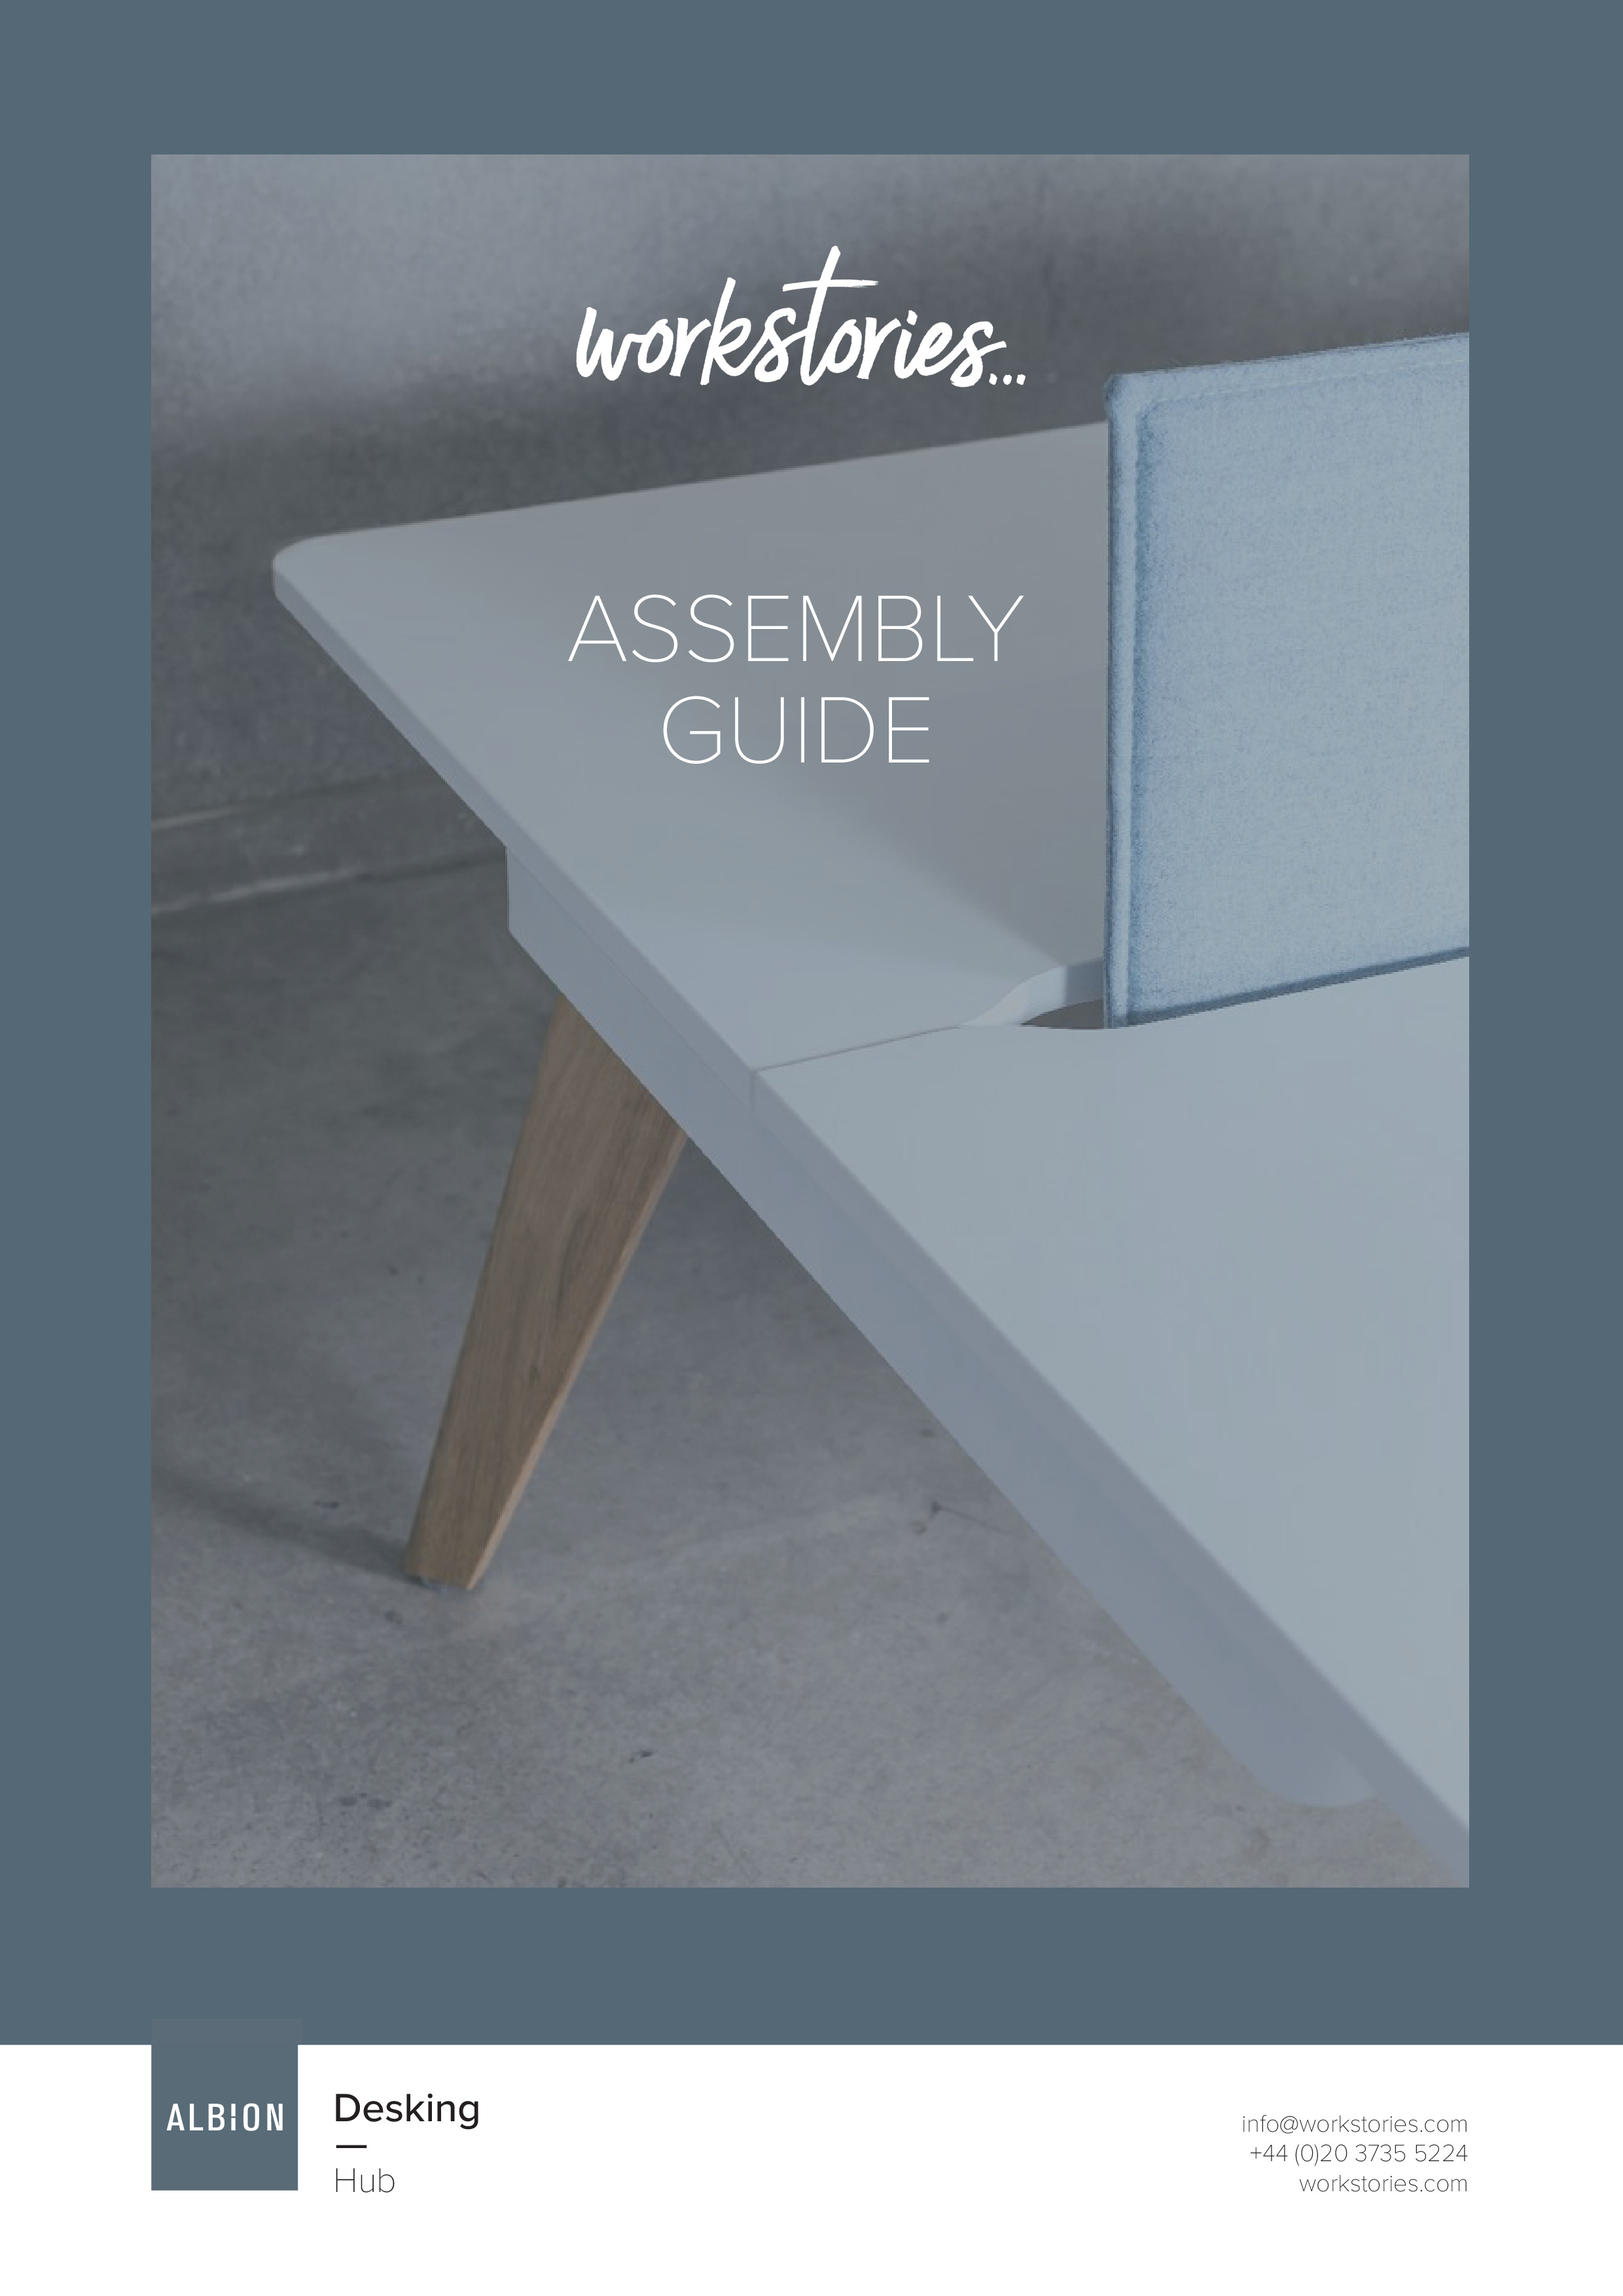 WS - ASSEMBLY GUIDE - Desking - Hub